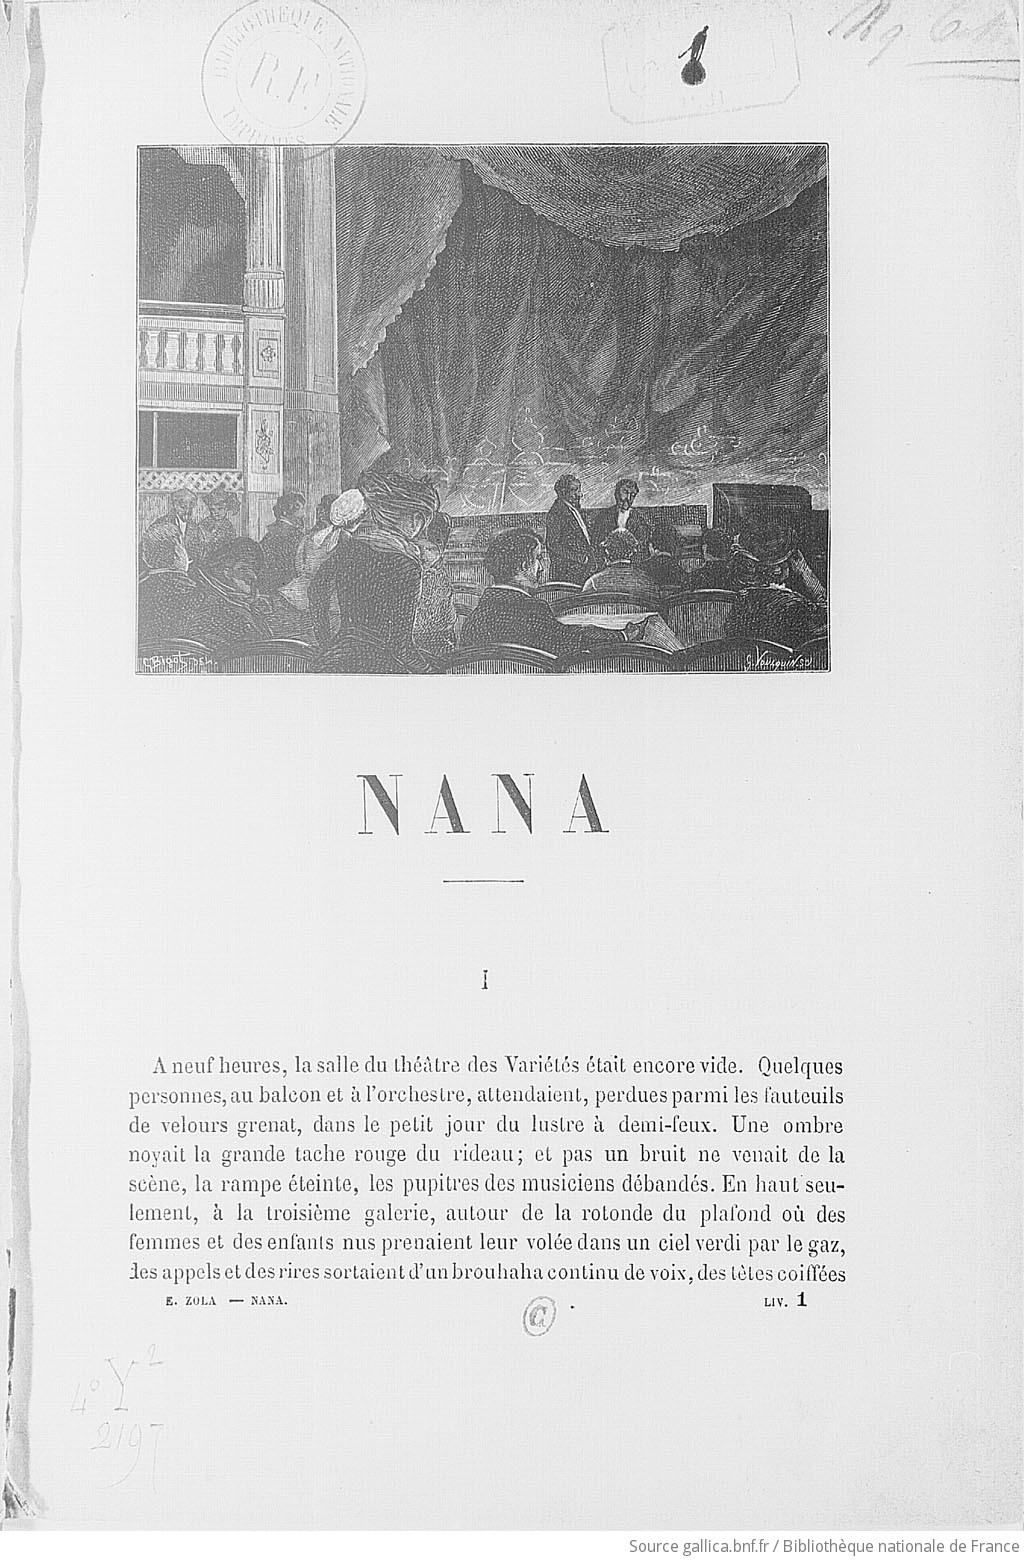 [Illustrations de Nana] André Gill Bertall dess G Bellenger Bigot Clairin [et al ] grav Emile Zola aut du texte